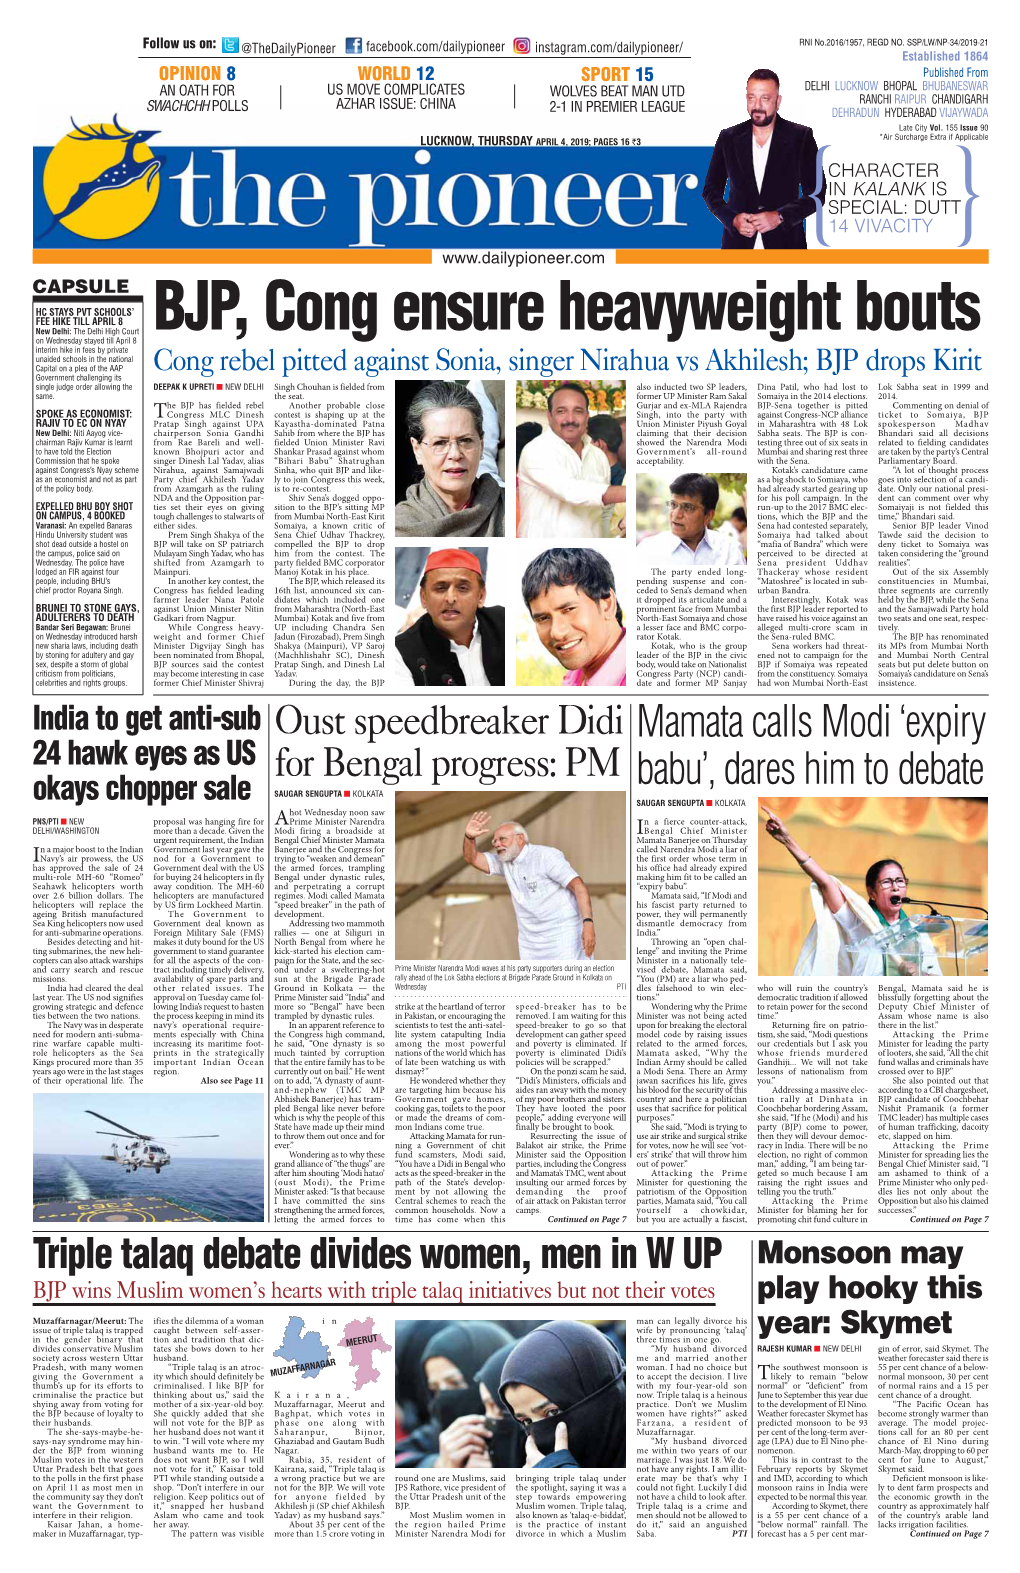 BJP, Cong Ensure Heavyweight Bouts